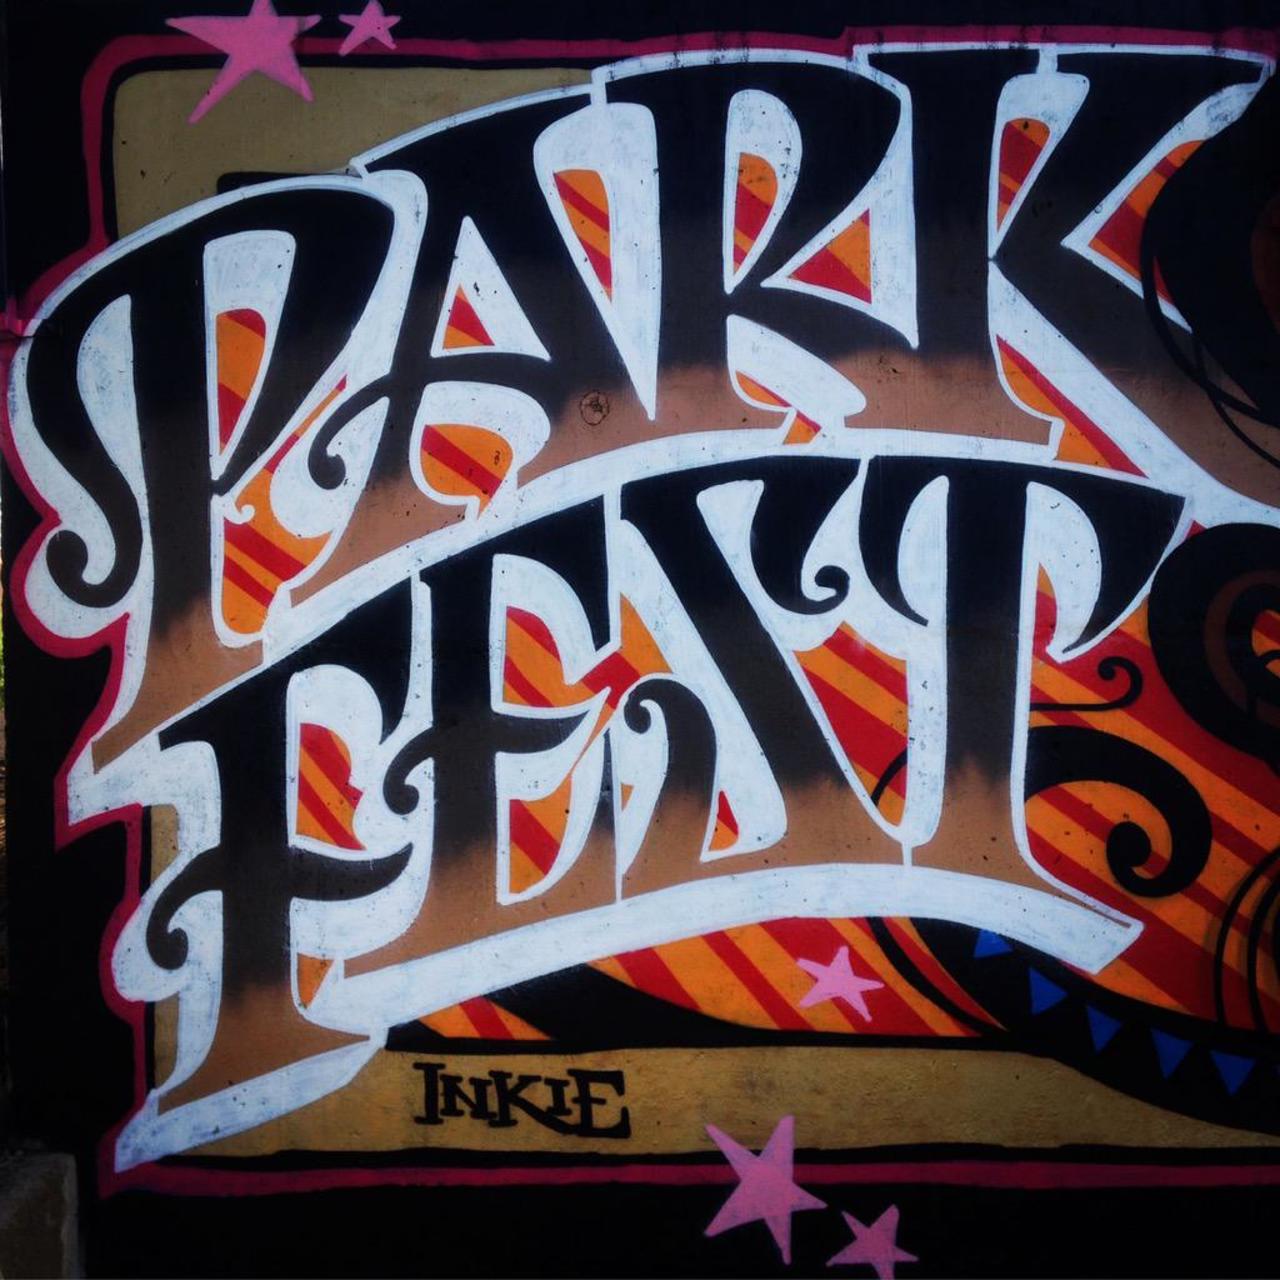 Early Bird catches the worm... #parkfest #Bristol #graffiti #streetart http://t.co/eOr4qnYoIk